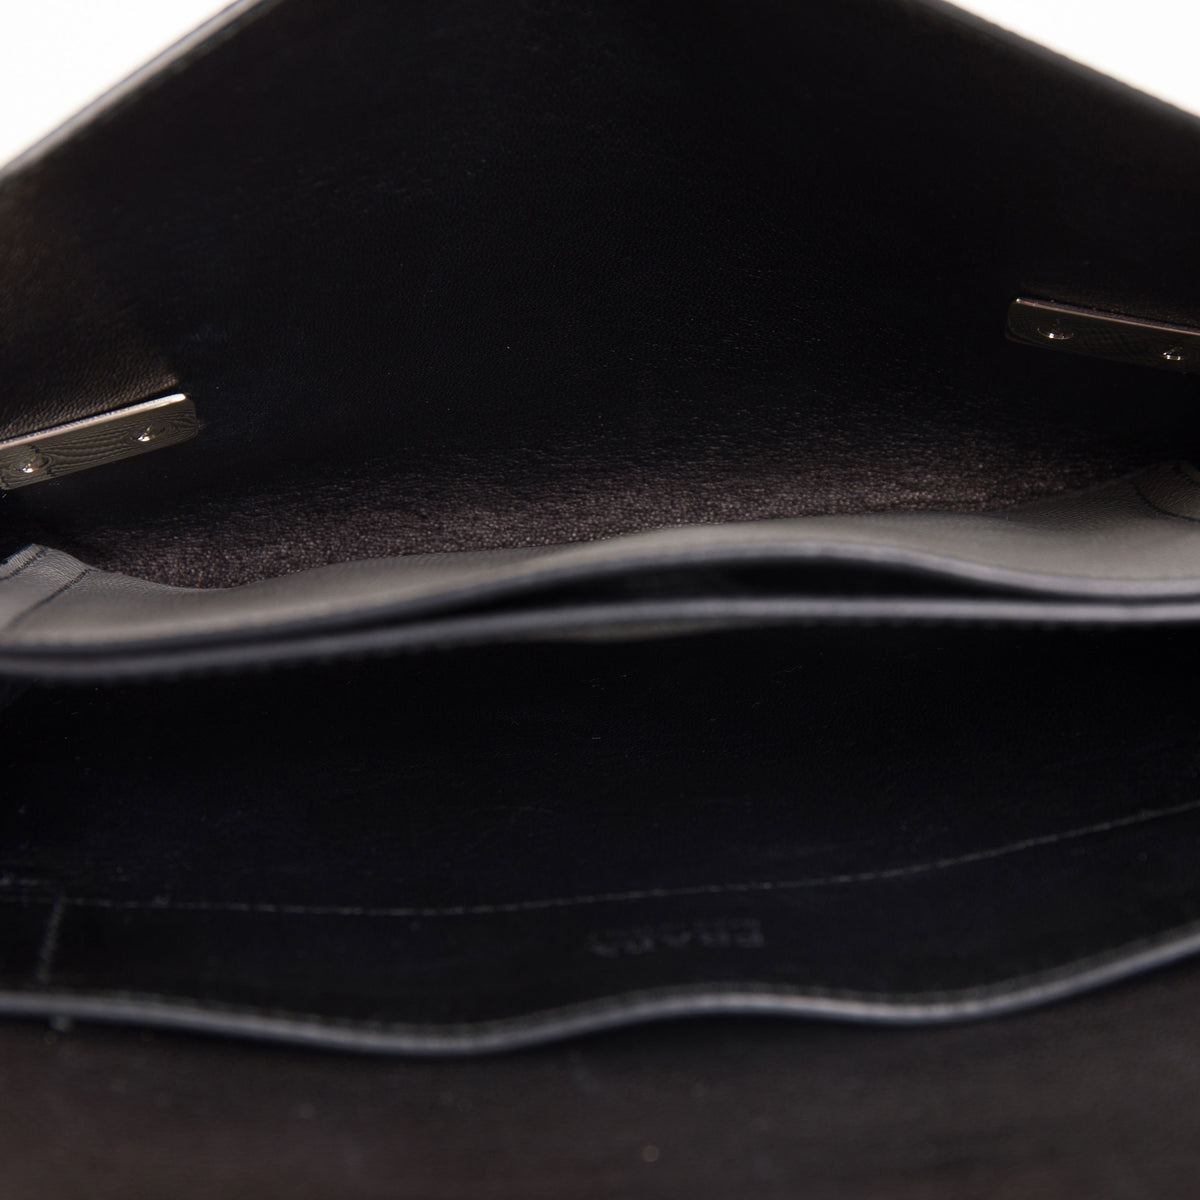 Prada Glicine Saffiano Leather Pattina Chain Shoulder Bag